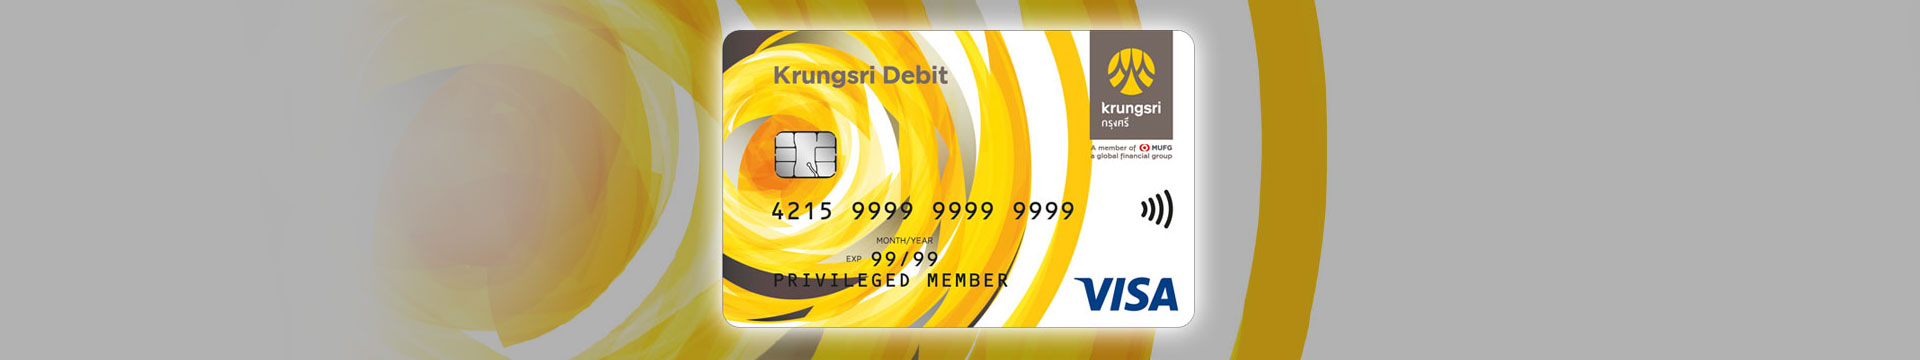 Krungsri Debit Card